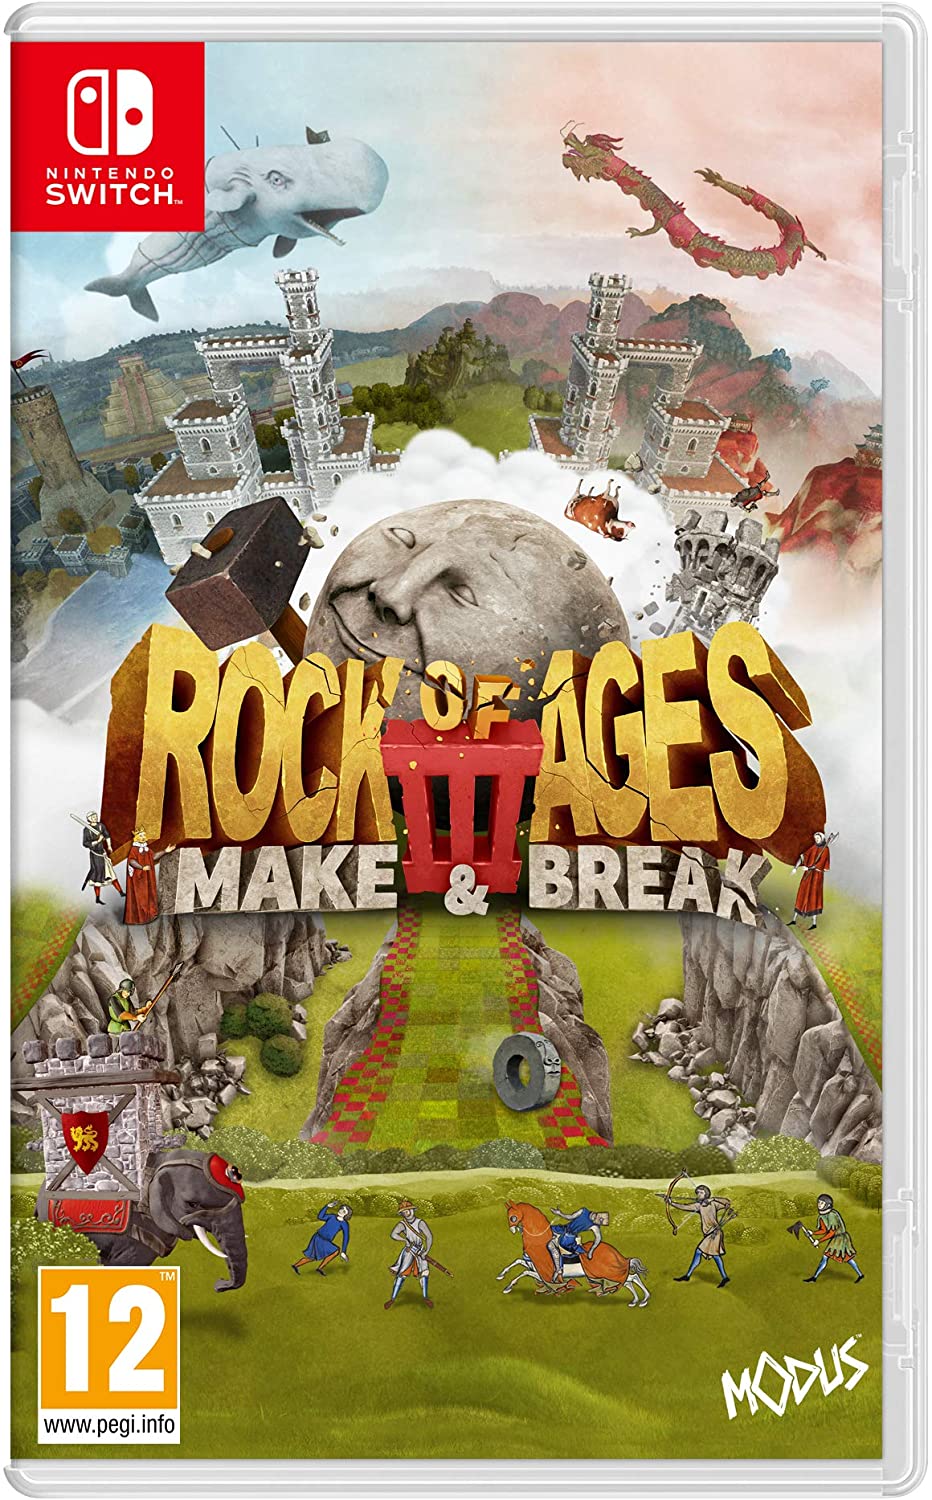 Rock of Ages 3 Make & Break (Nintendo Switch)